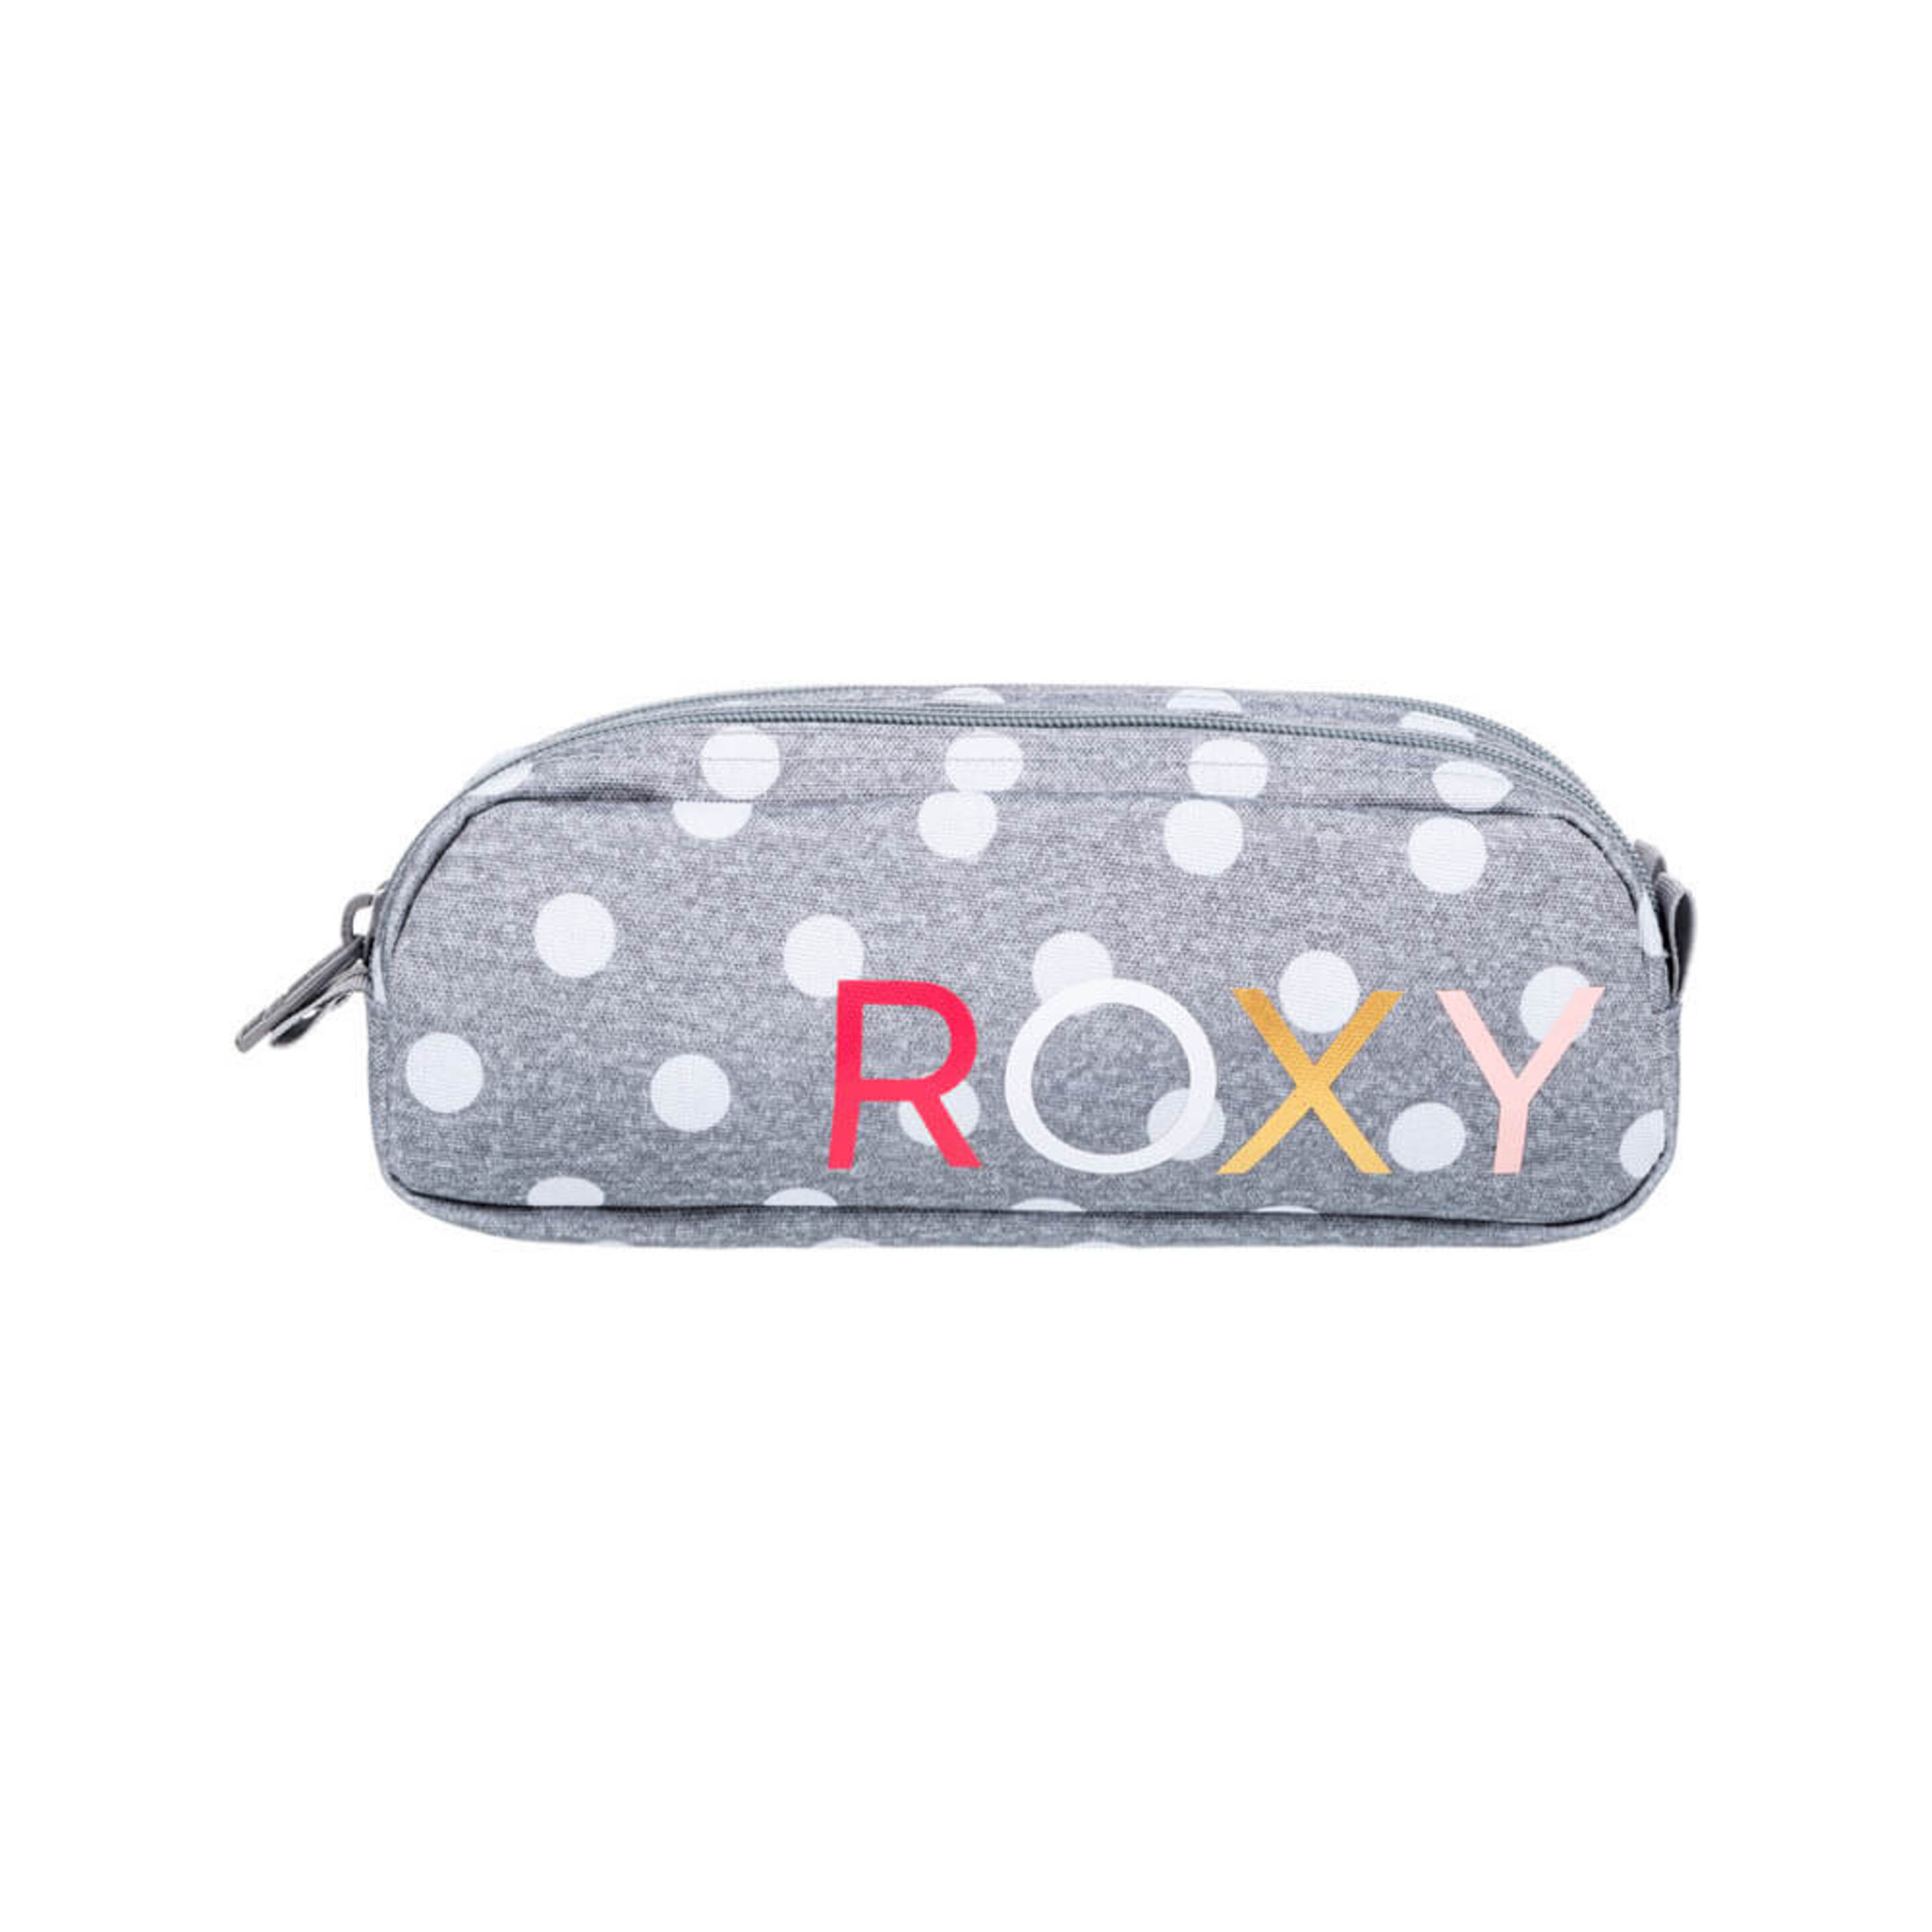 Roxy Travel Accessory- Money Belt, Gray - gris - 